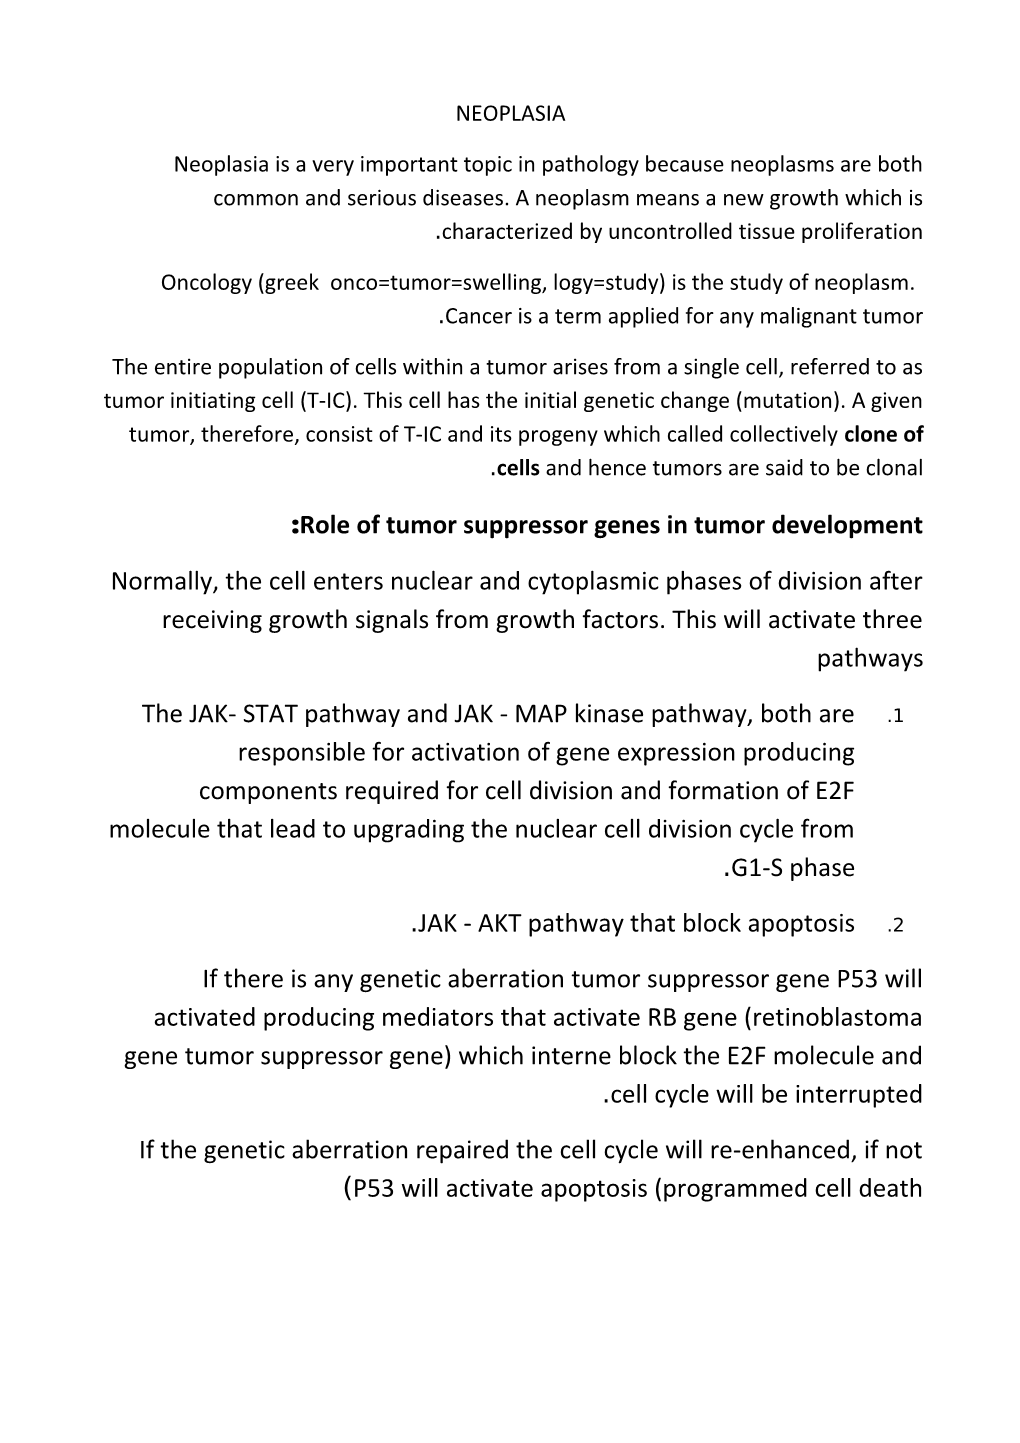 Role of Tumor Suppressor Genes in Tumor Development